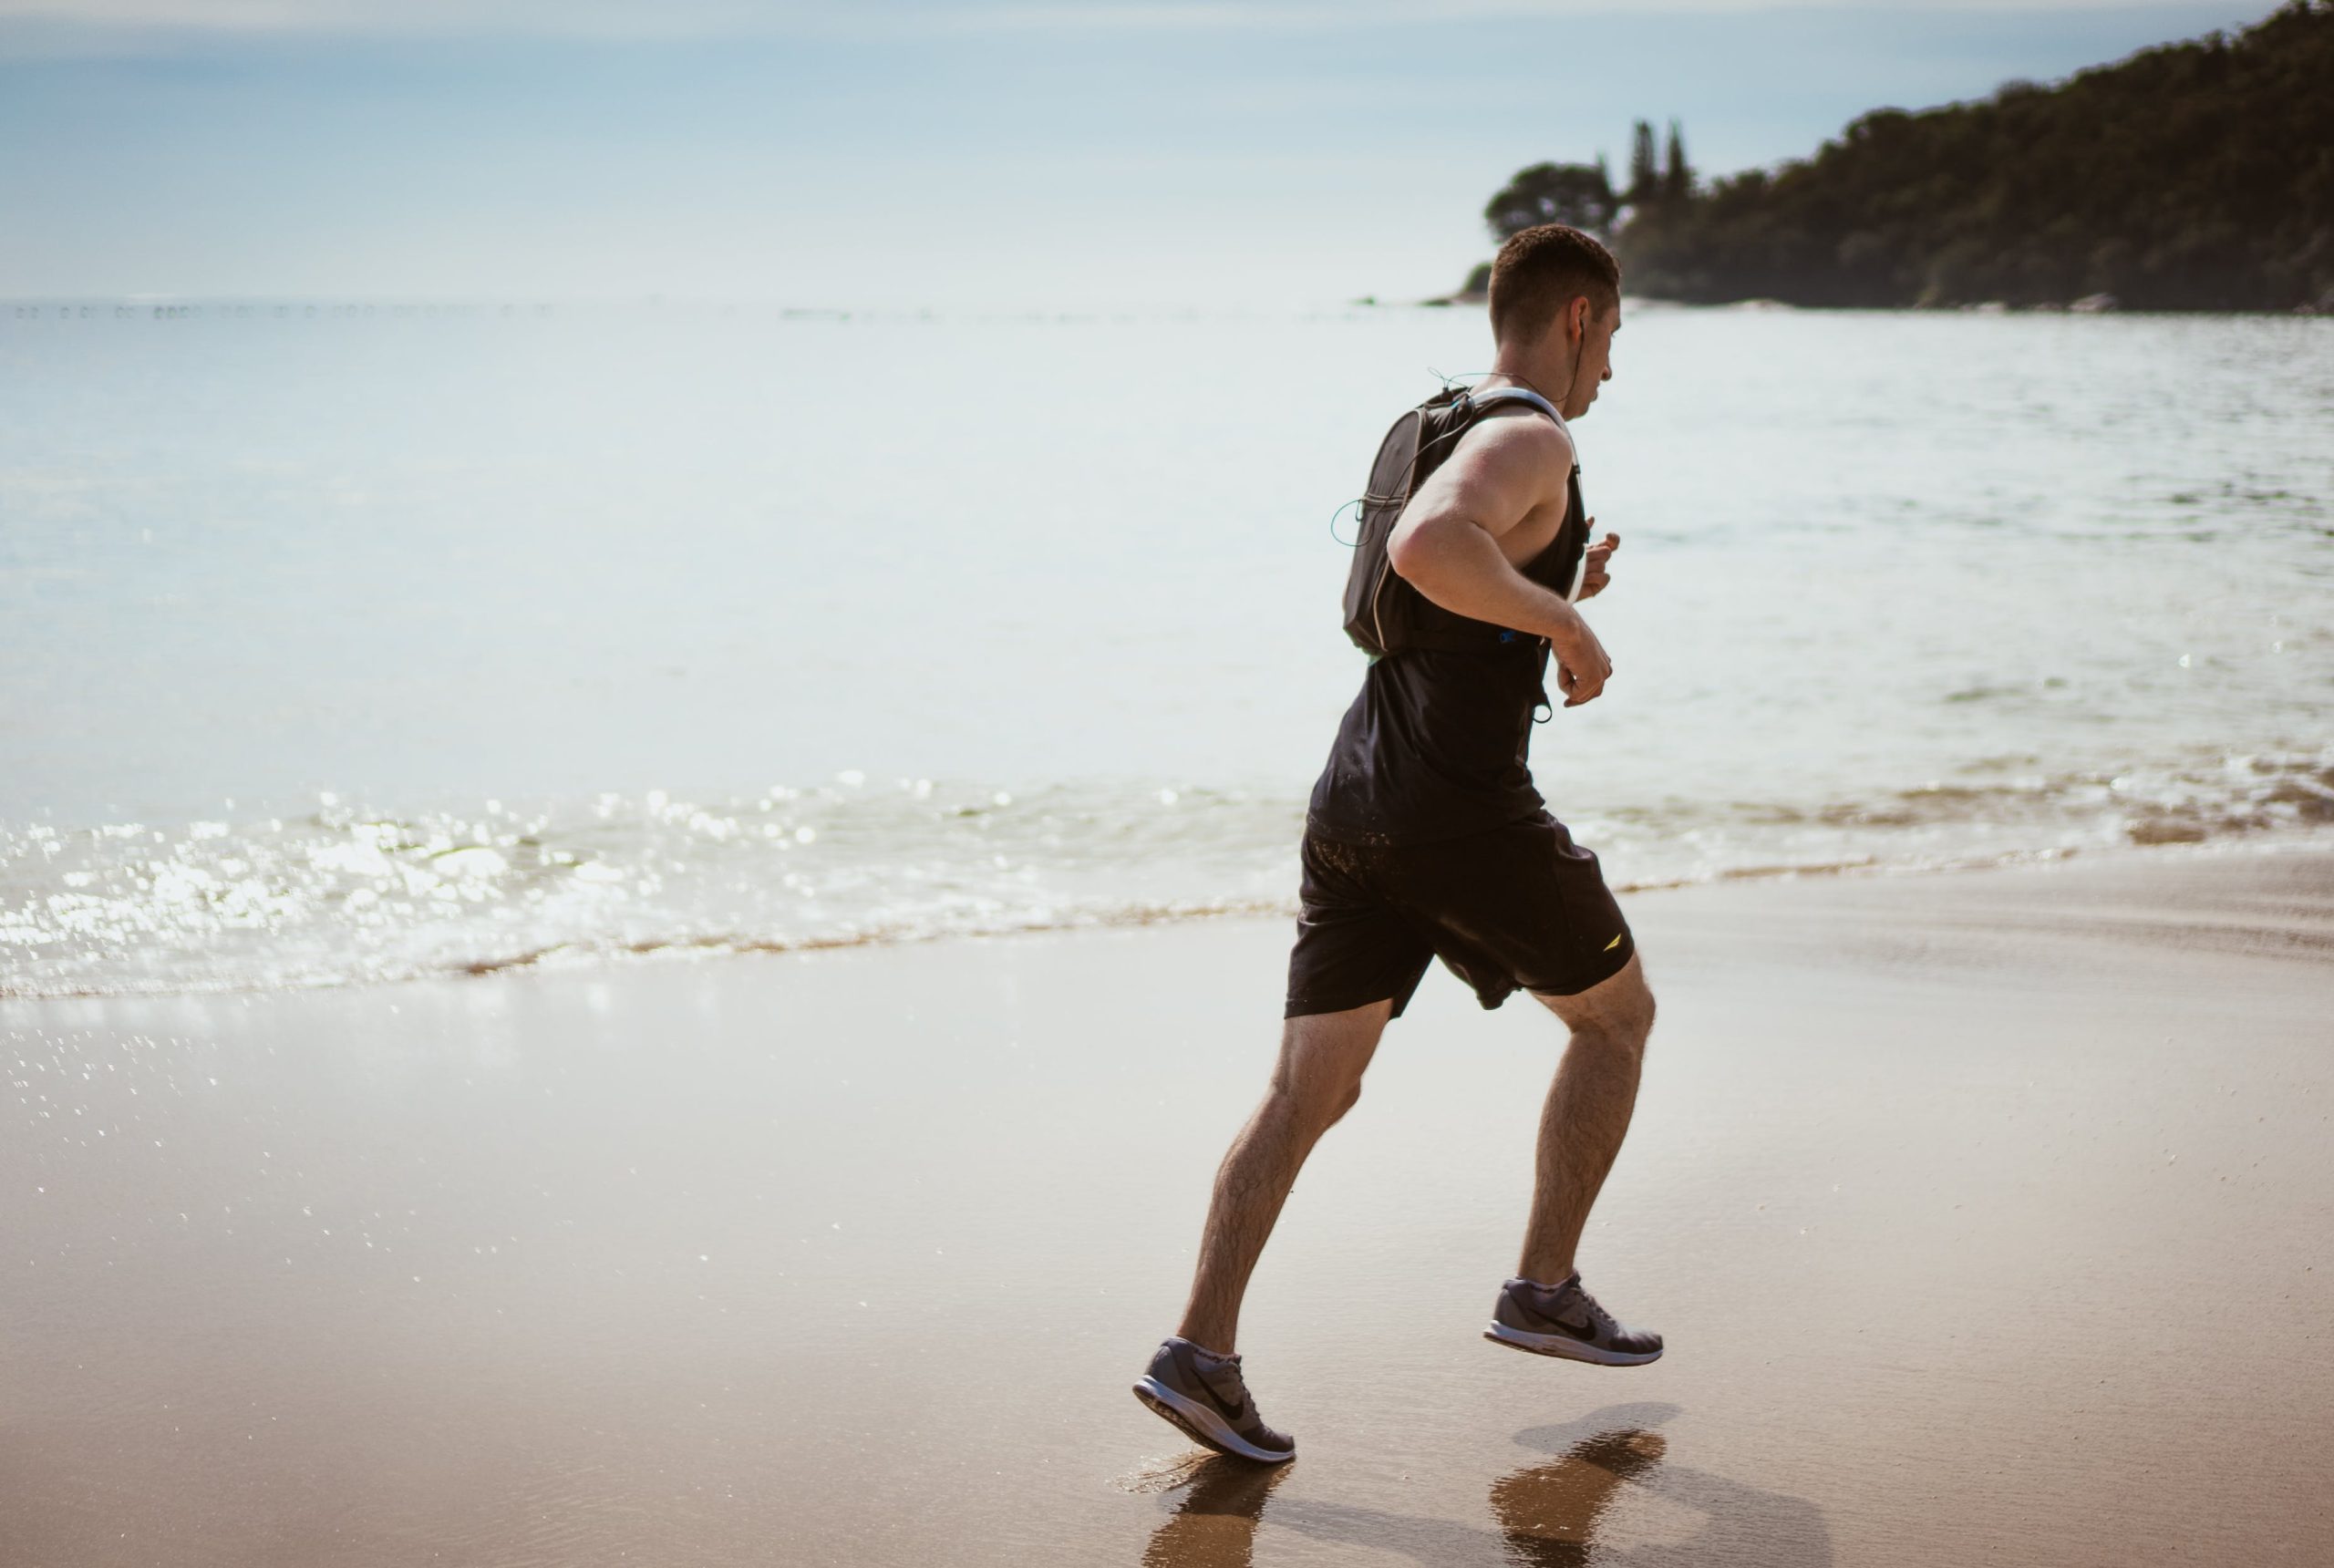 A man jogging on the beach near the ocean.